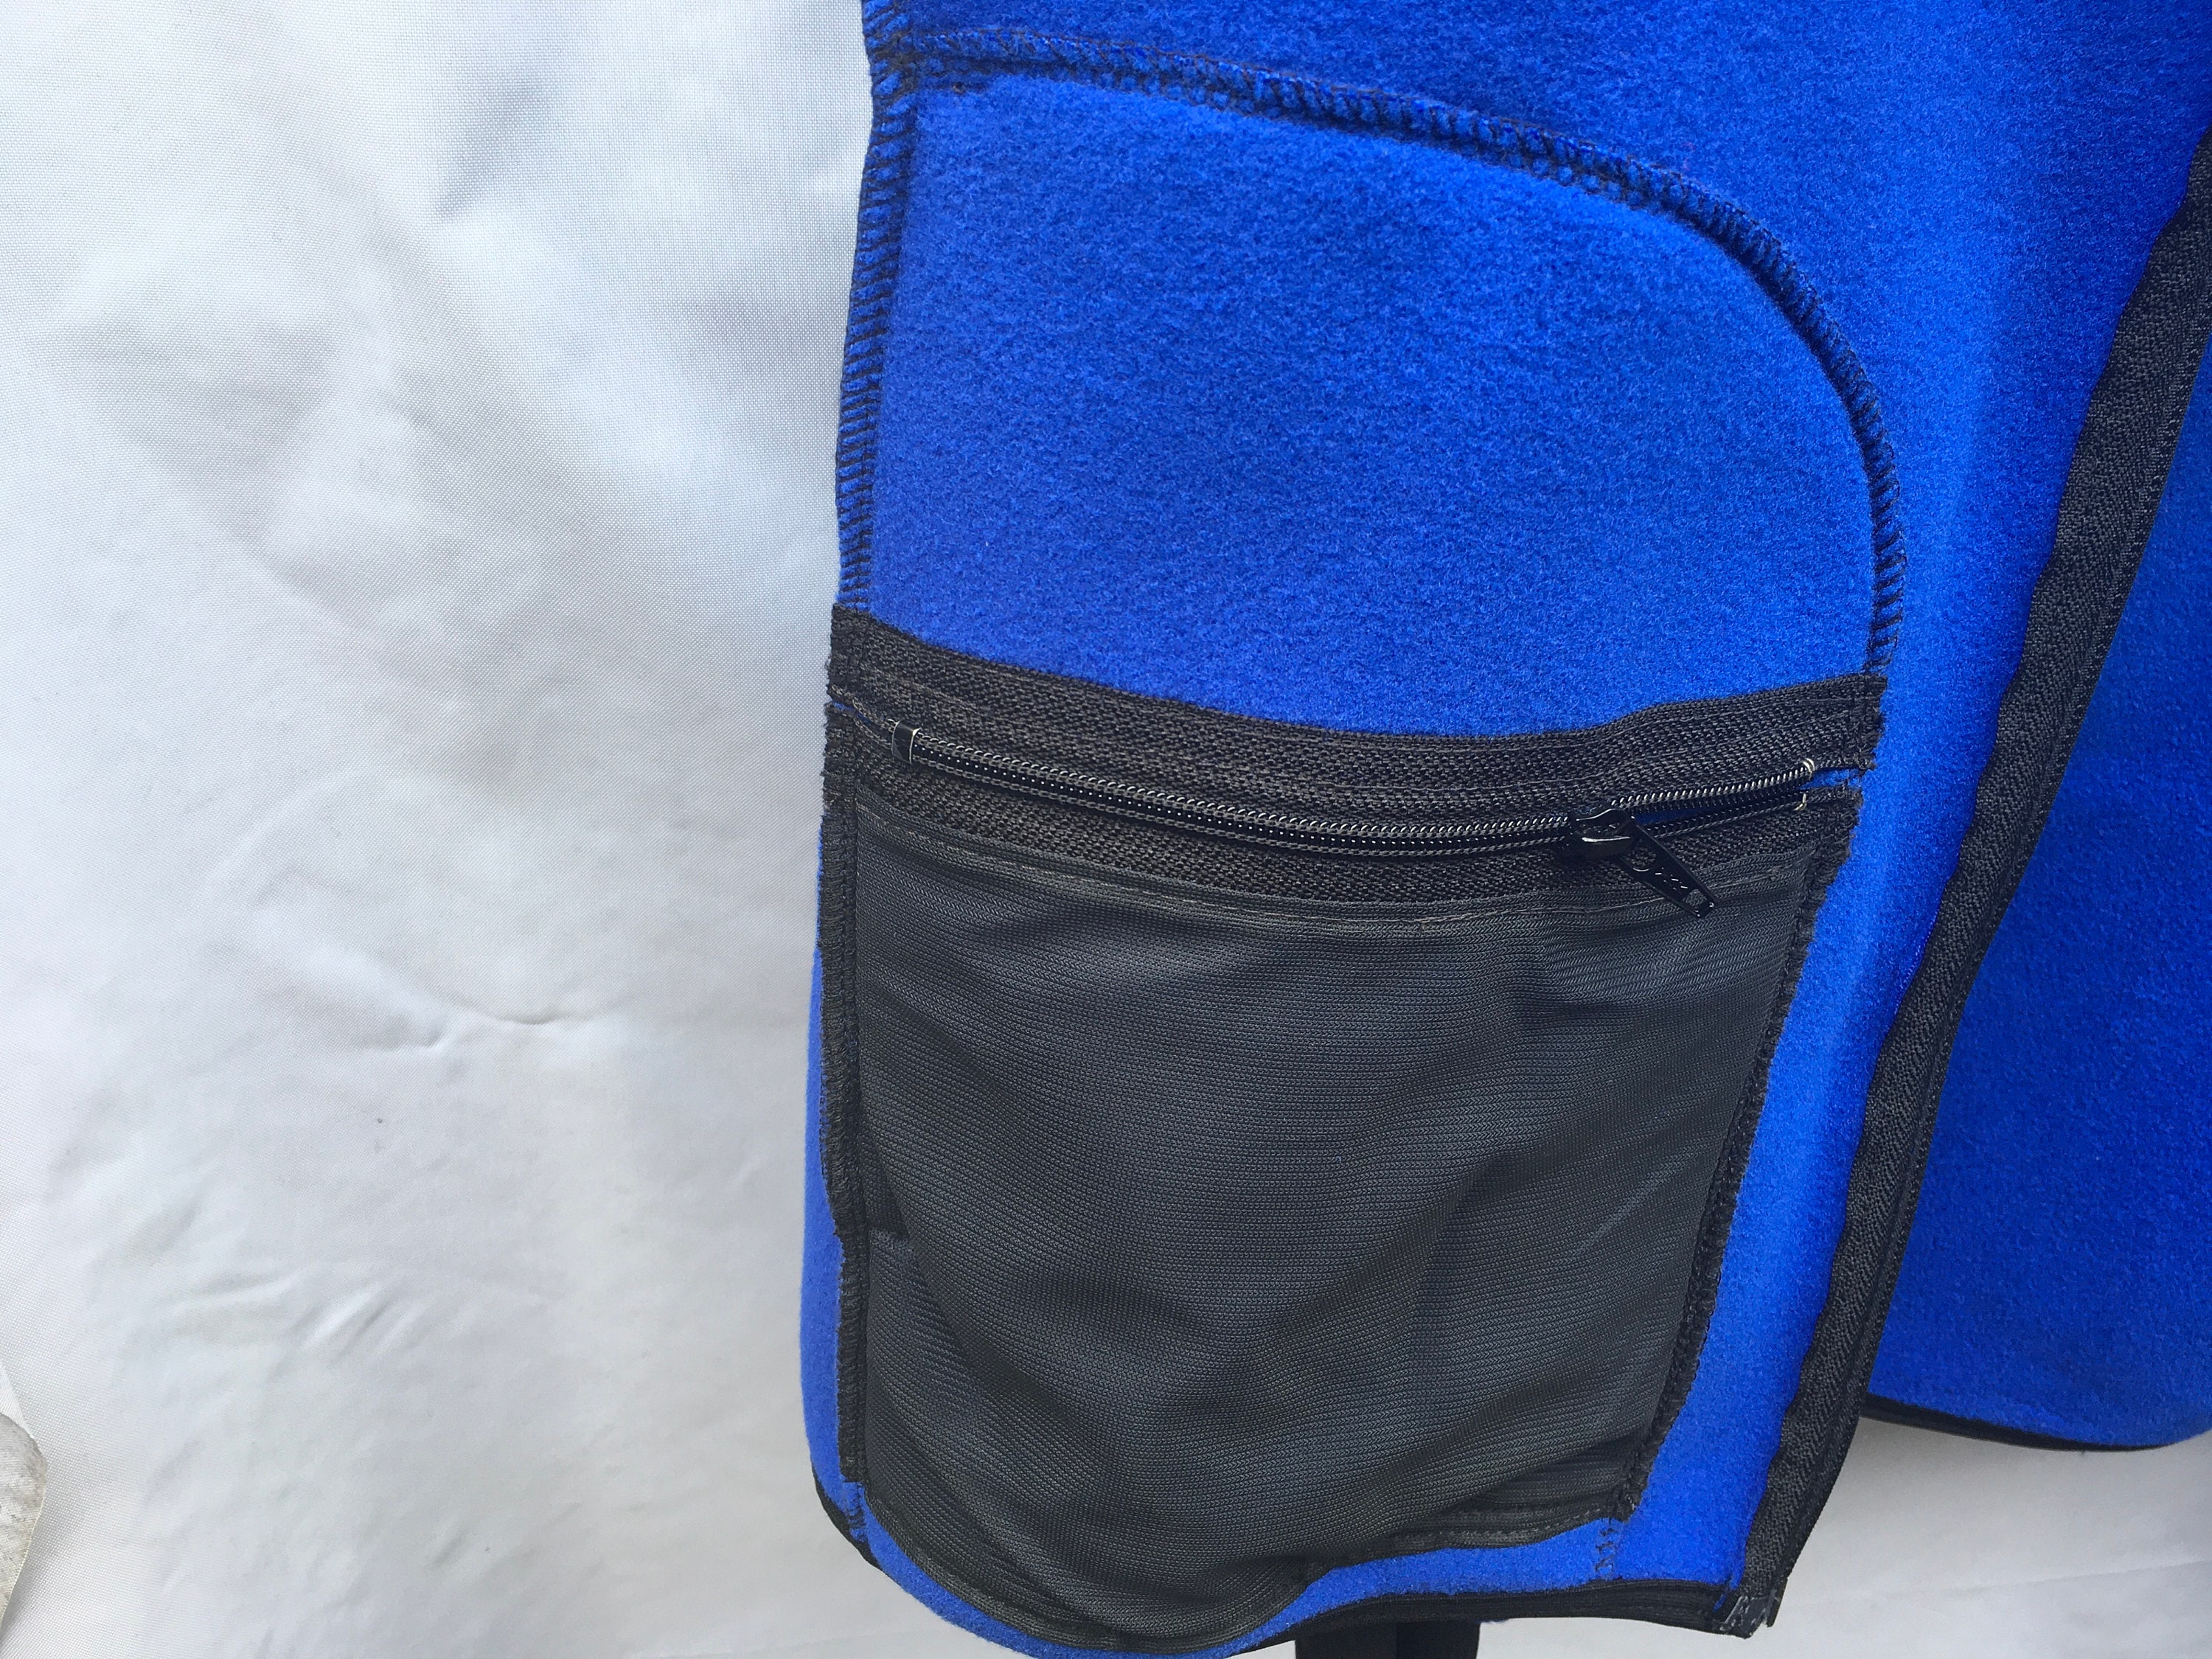 Royal Blue Unisex Fleece Zip up Jacket, Men or Women. Choose Your